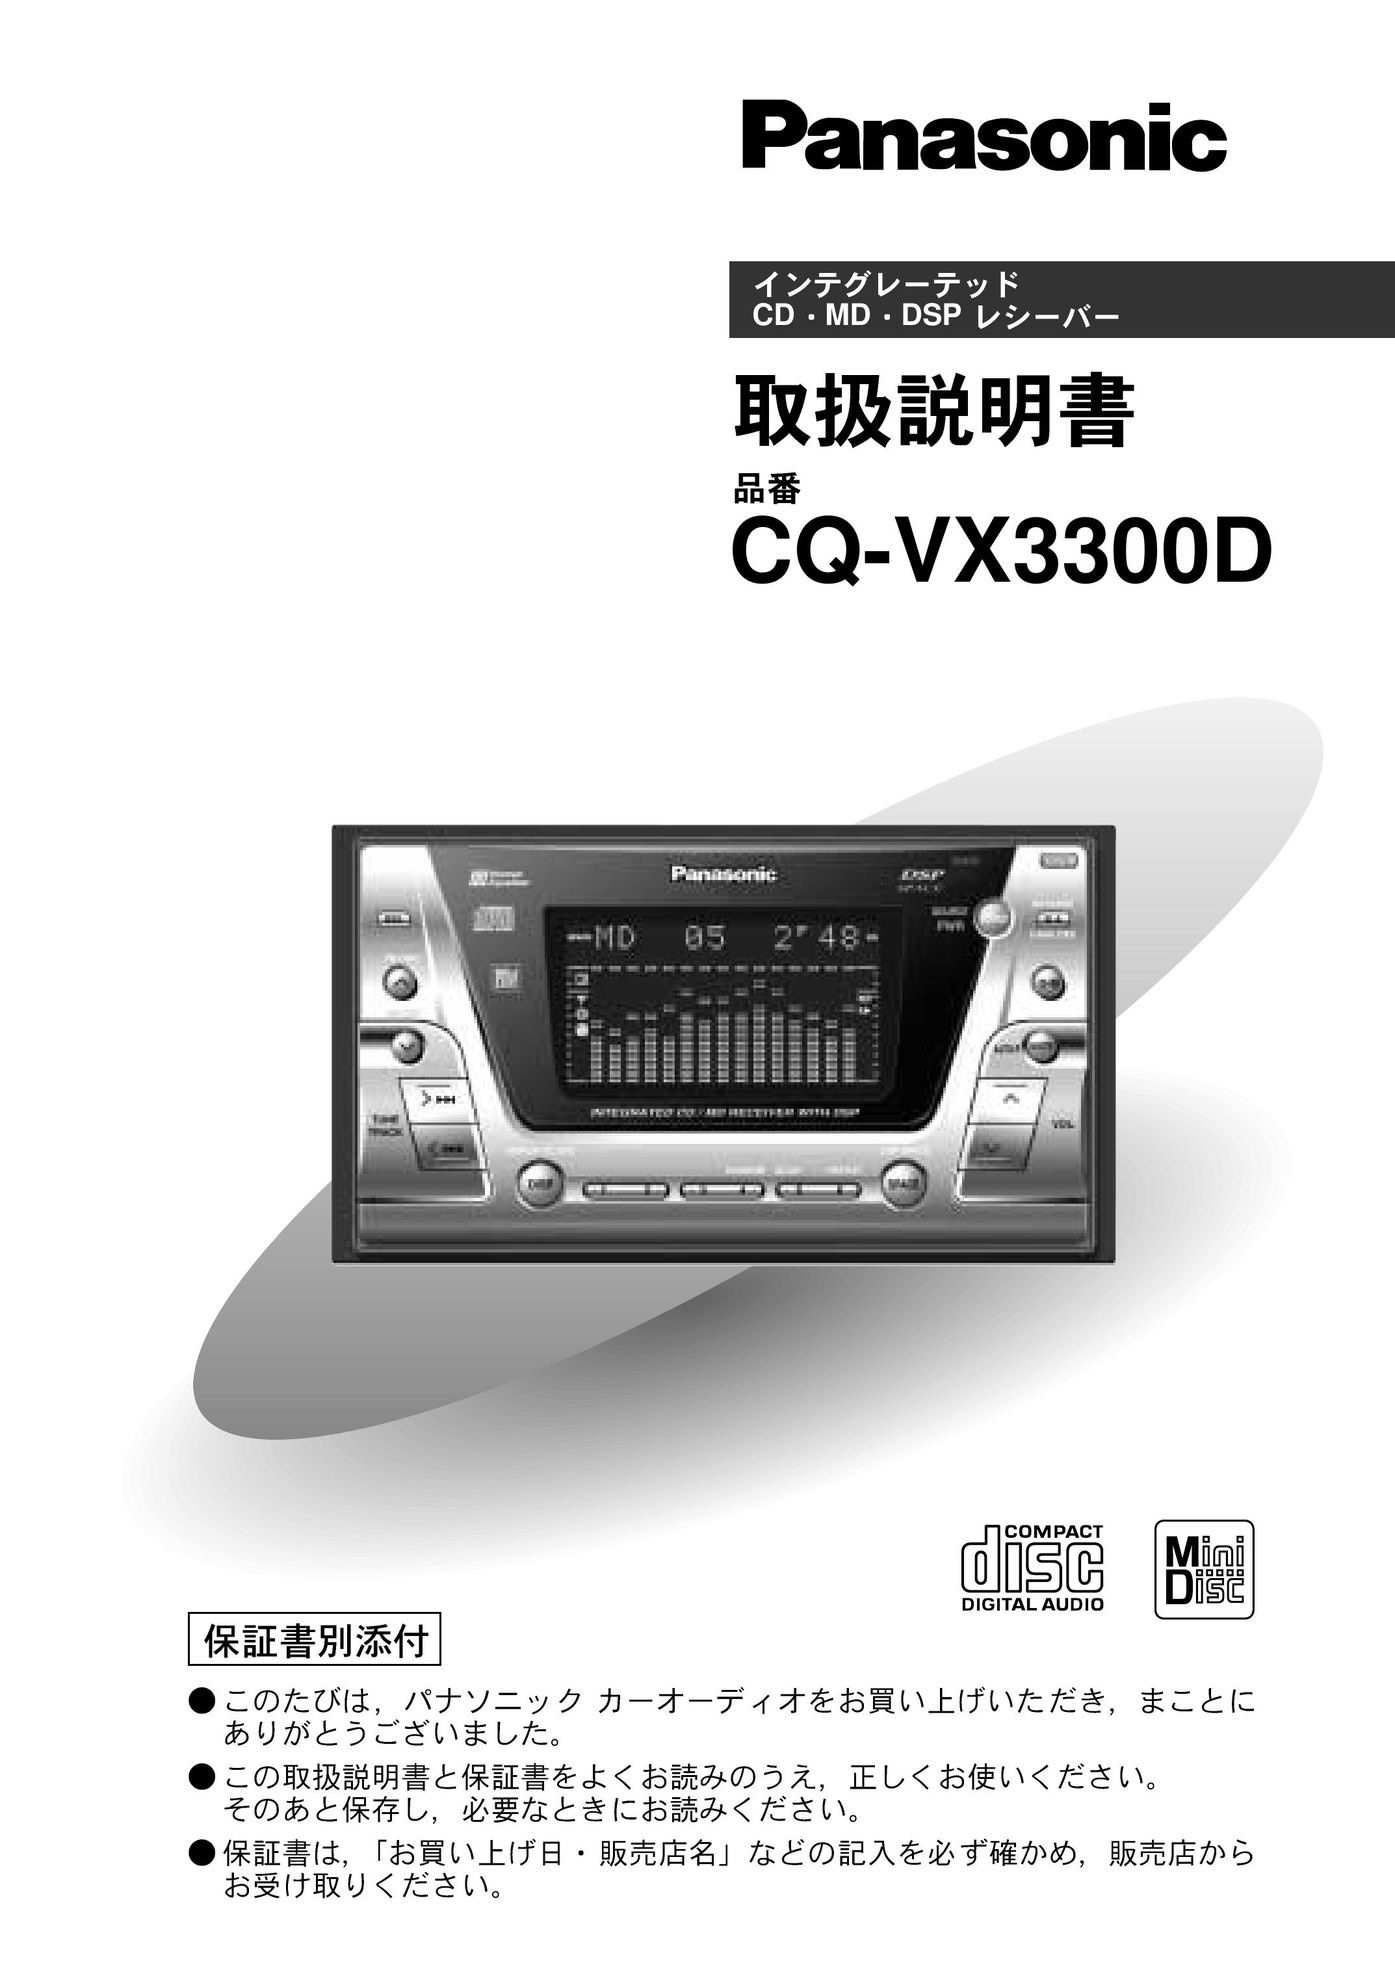 Panasonic CQ-VX3300D CD Player User Manual